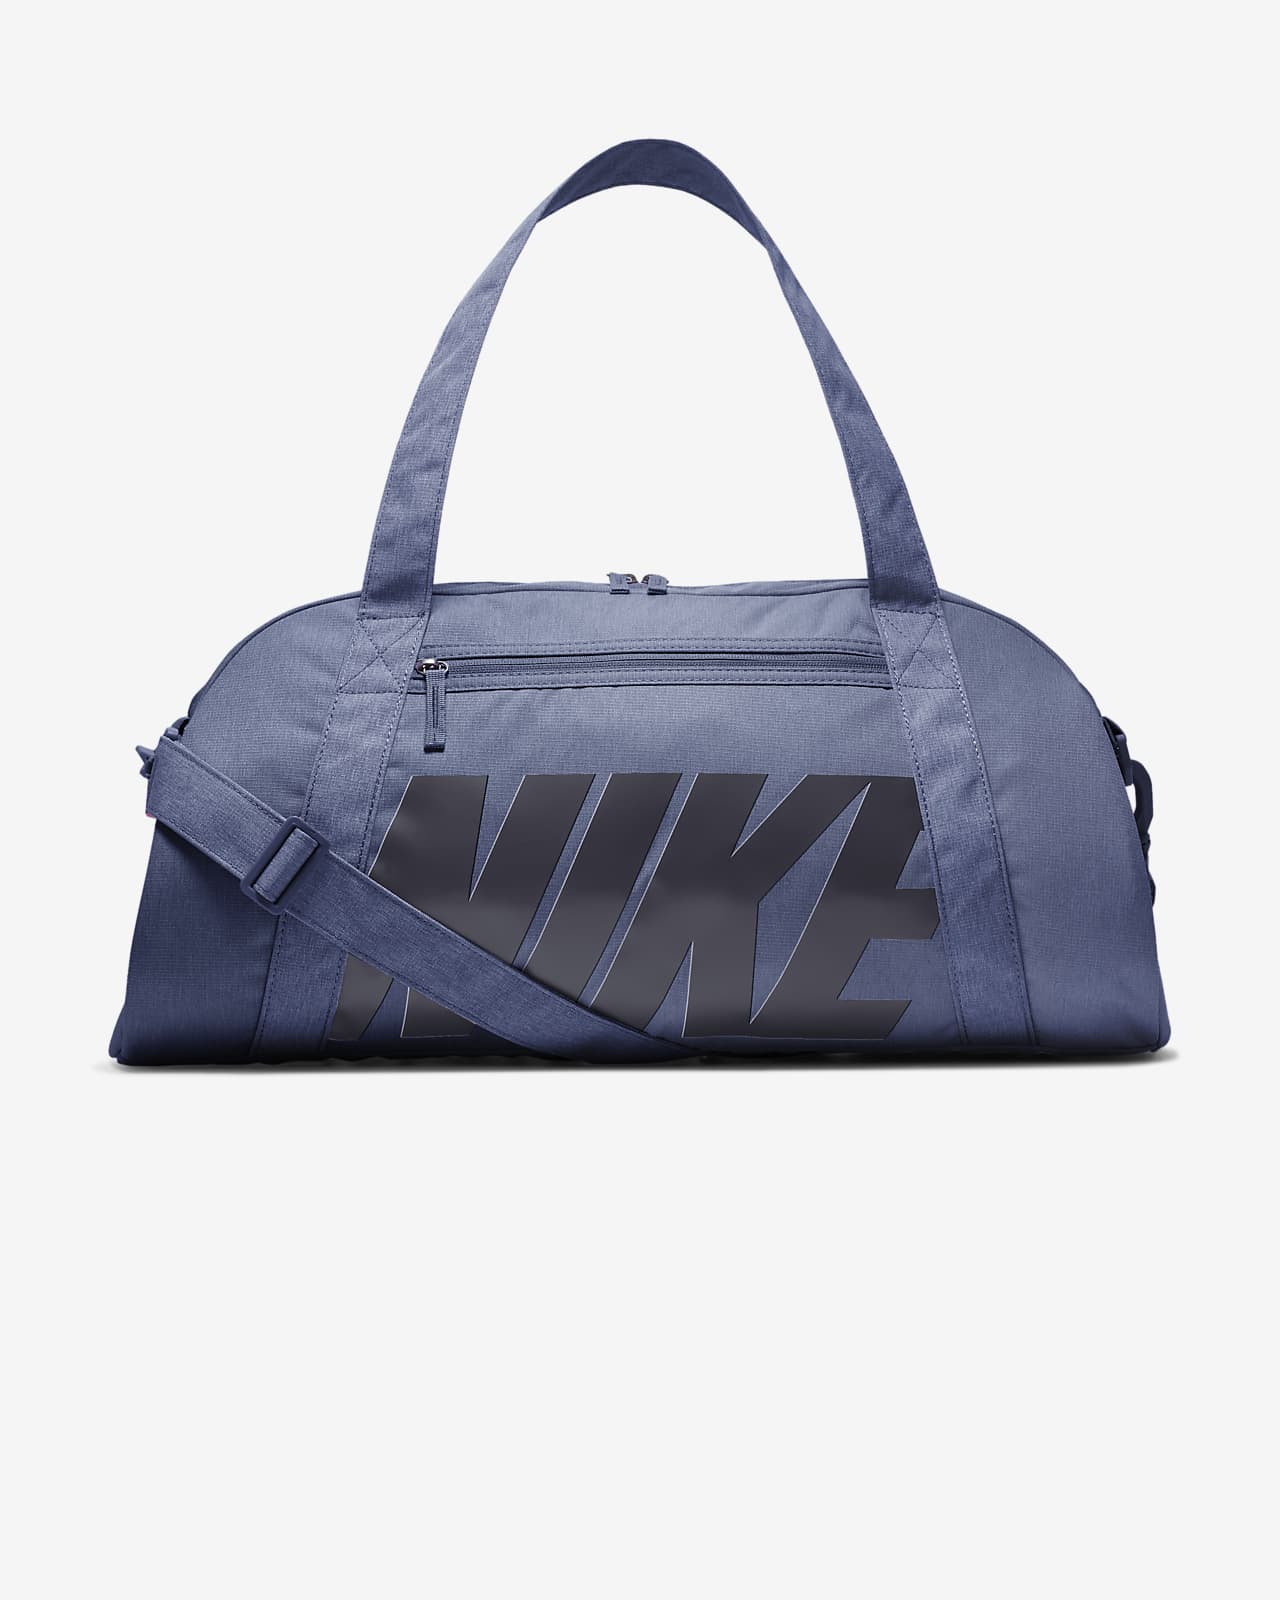 blue nike gym bag